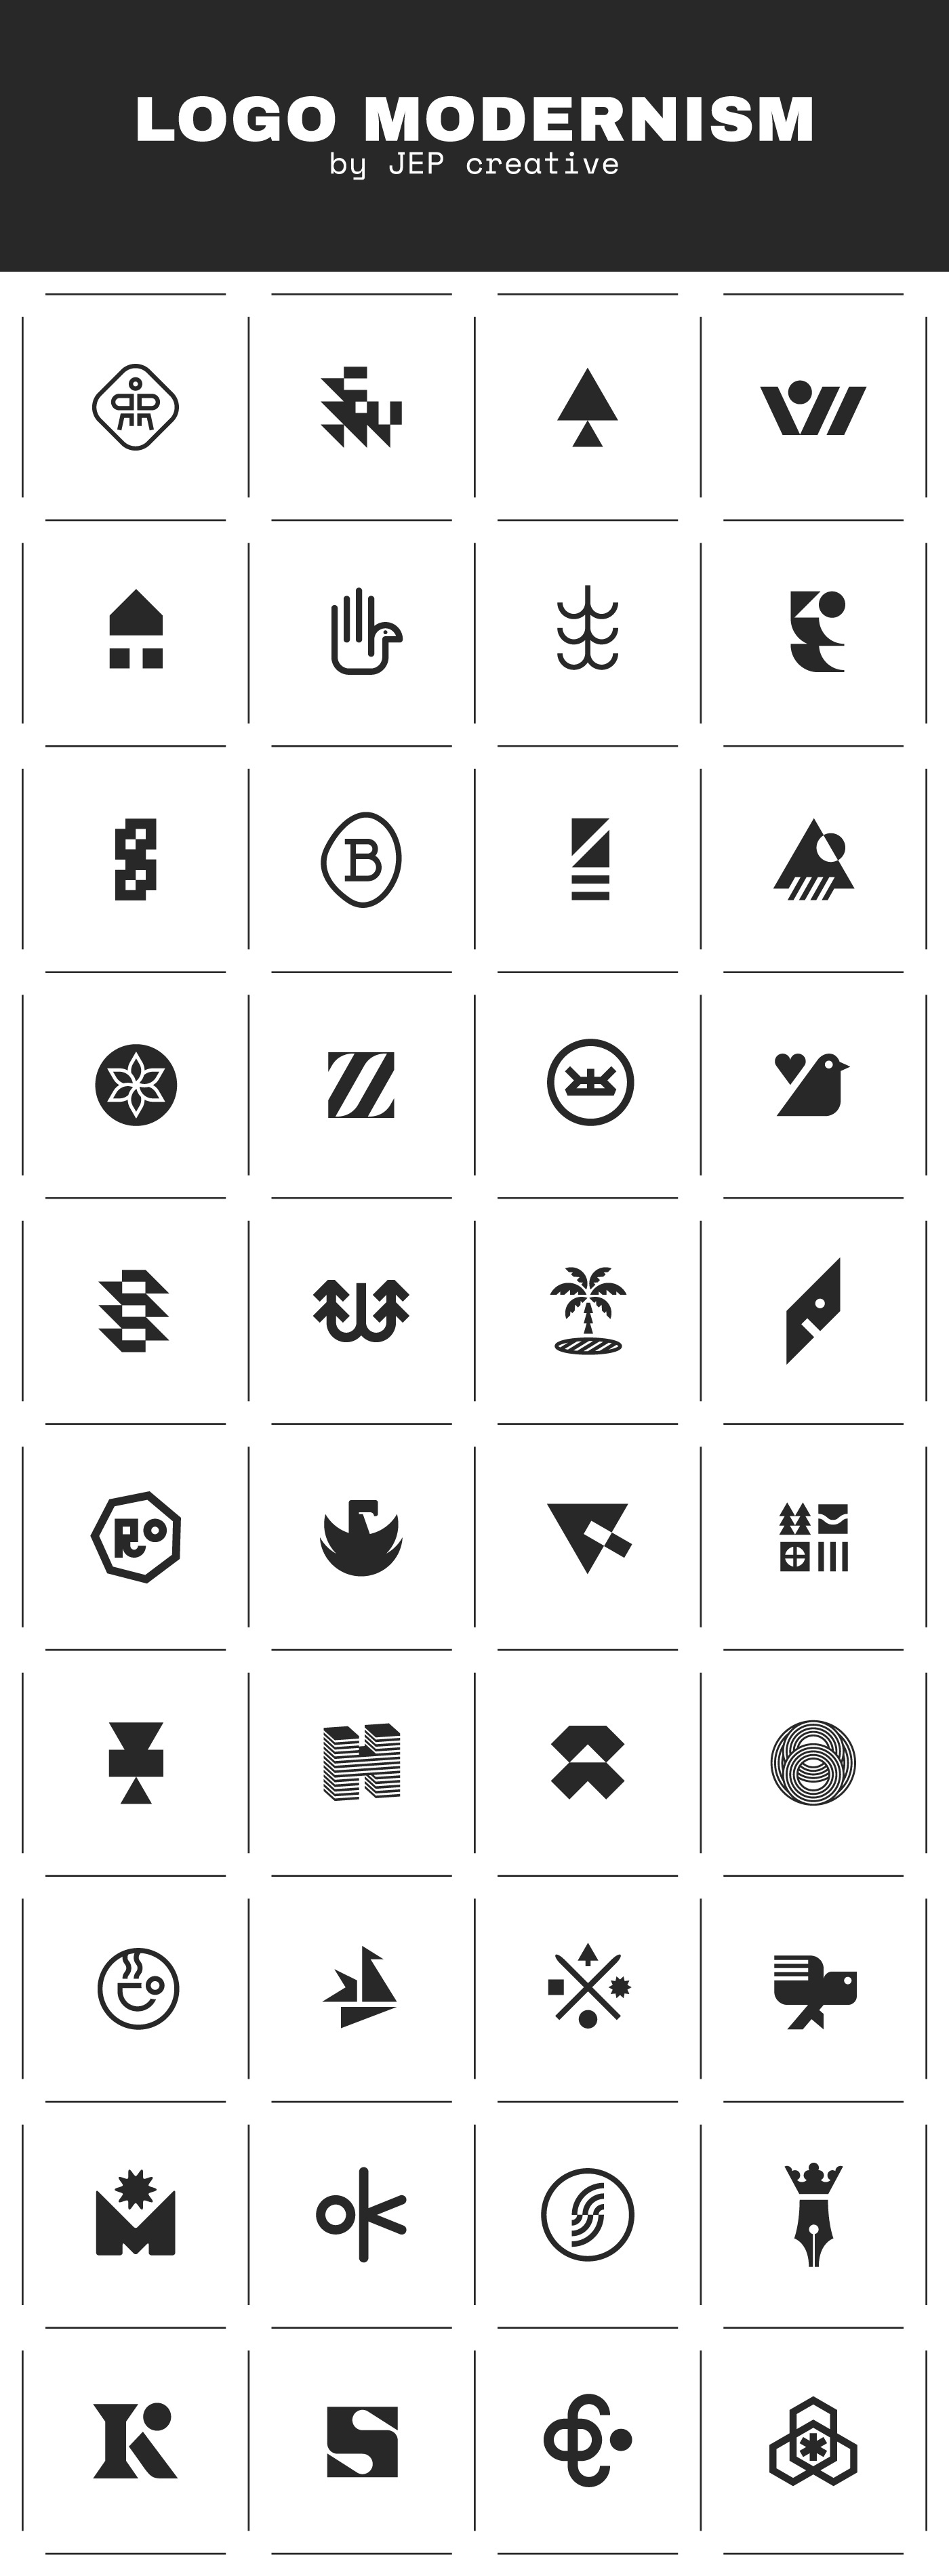 logo Logotype logomark Icon symbol modernism visual identity branding  mark abstract